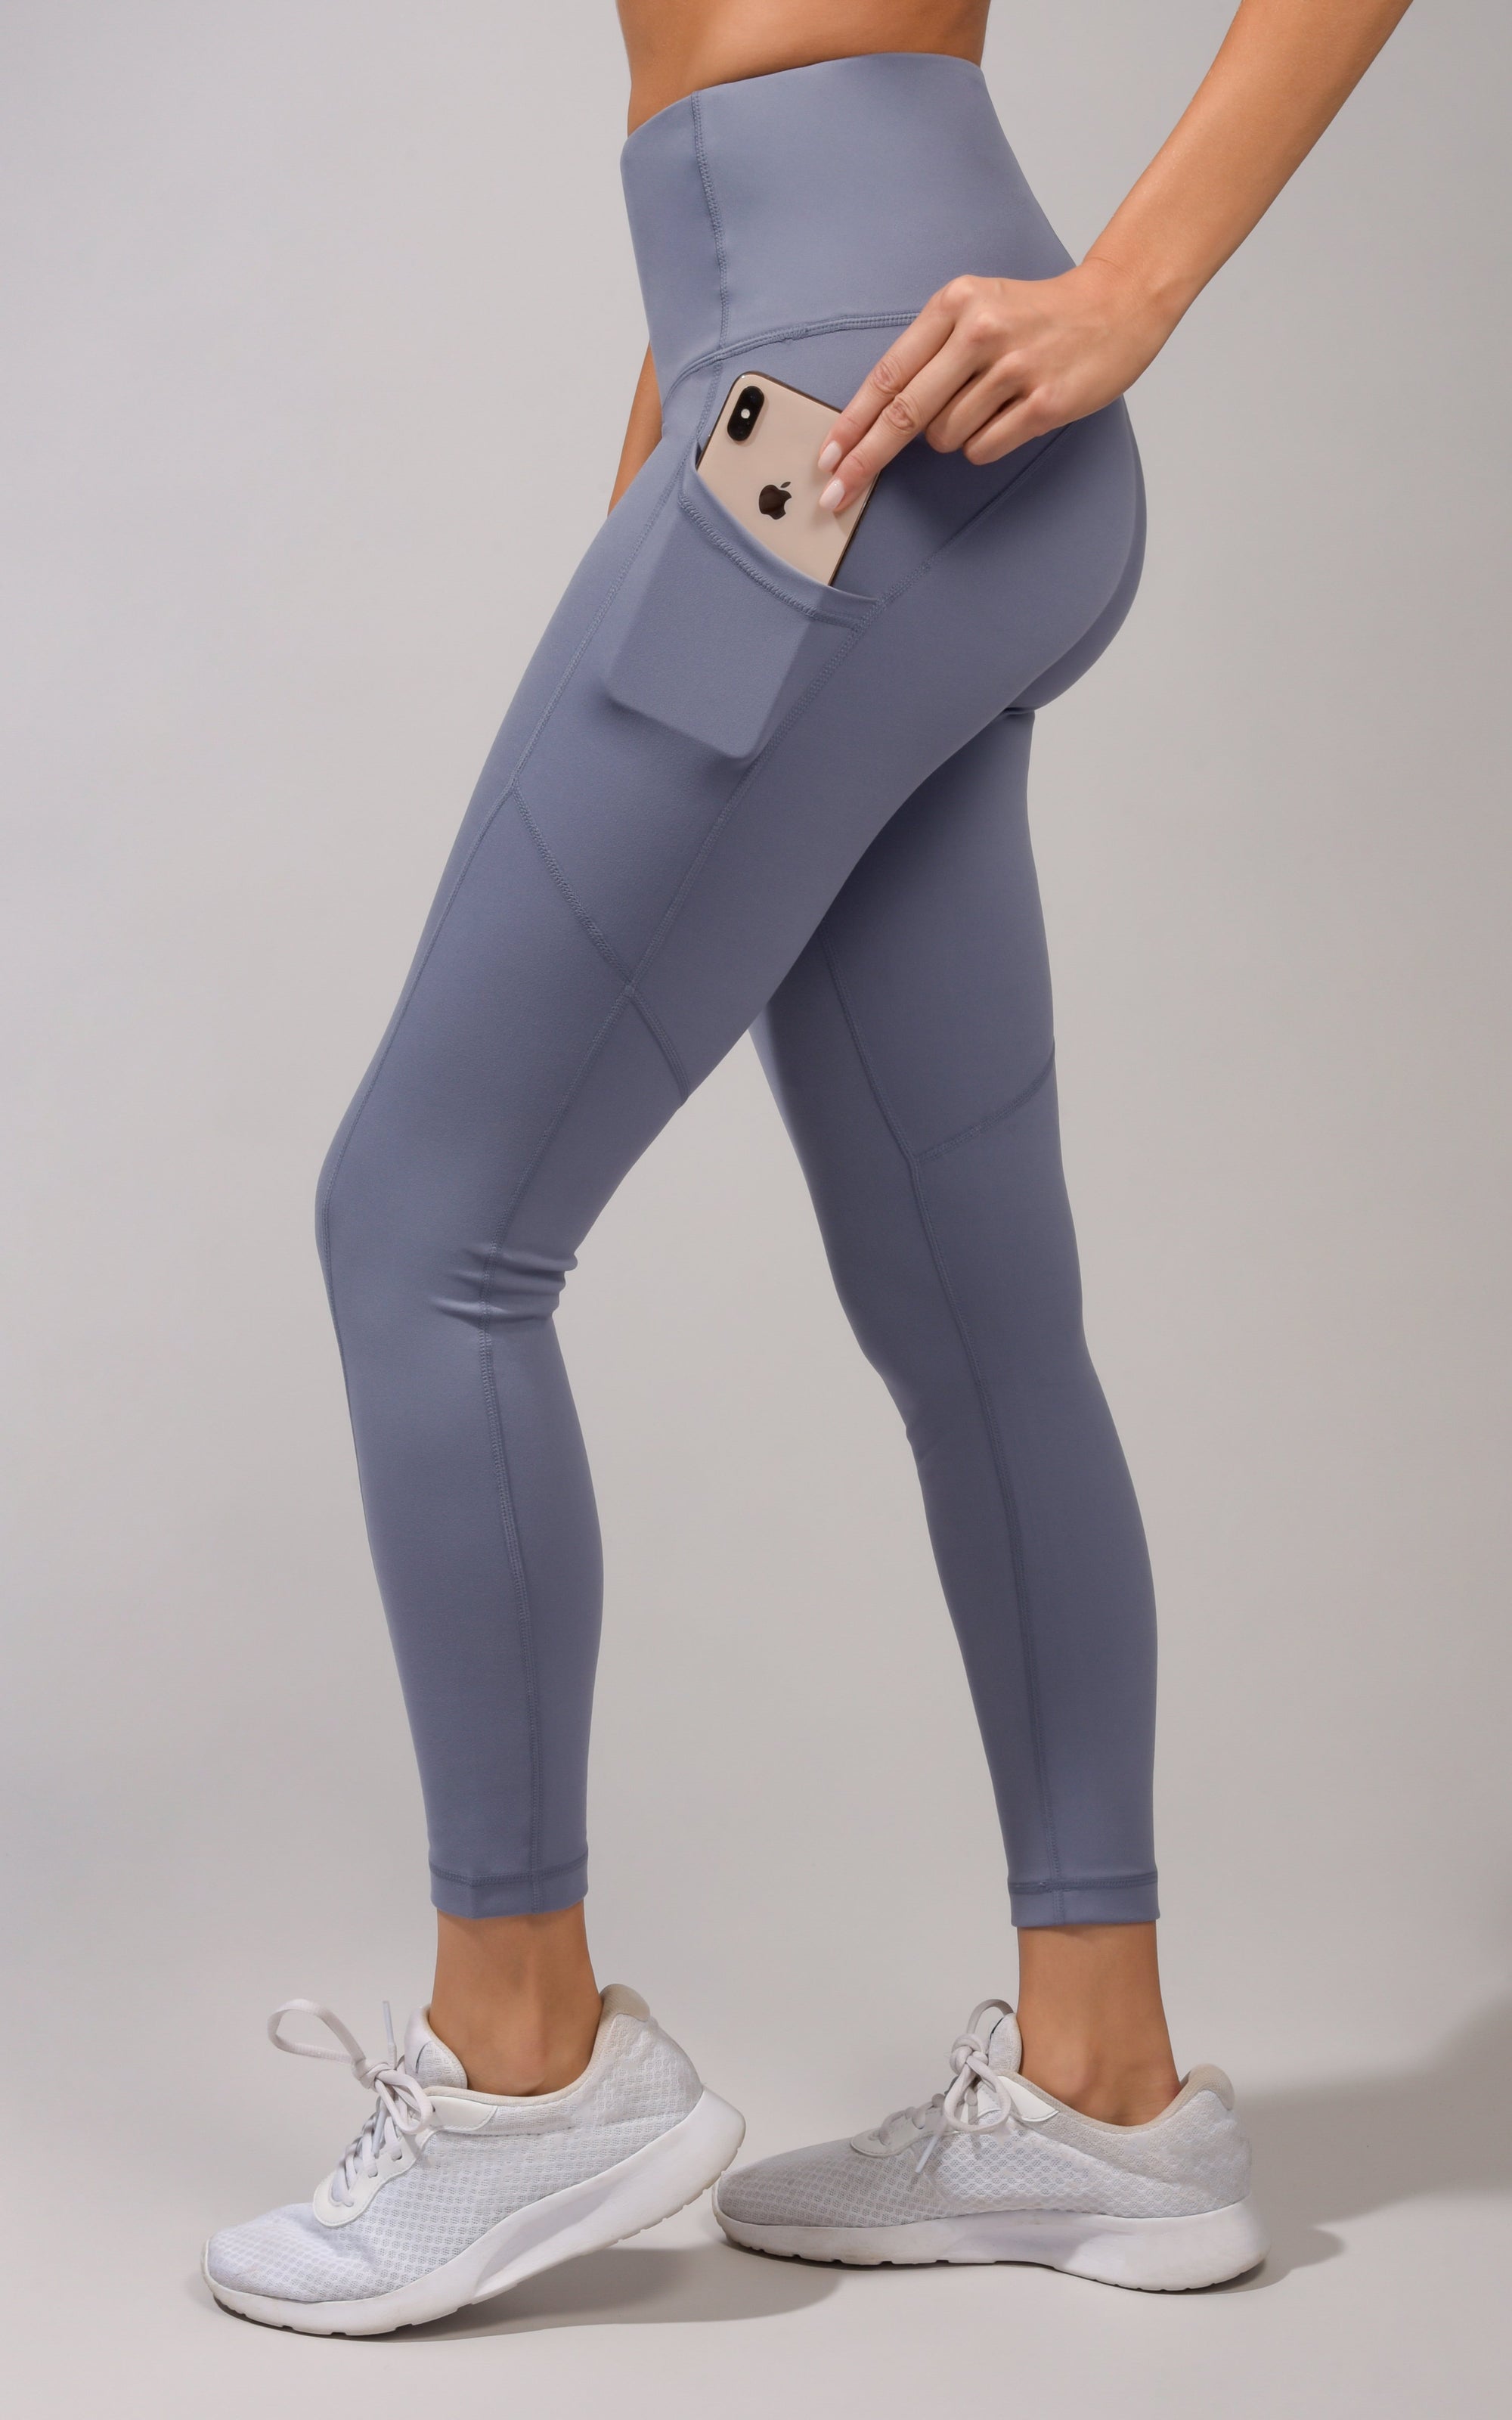 Yogalicious - Women's High Waist Side Pocket 7/8 Ankle Legging - Blue  Fusion - X Large : Target